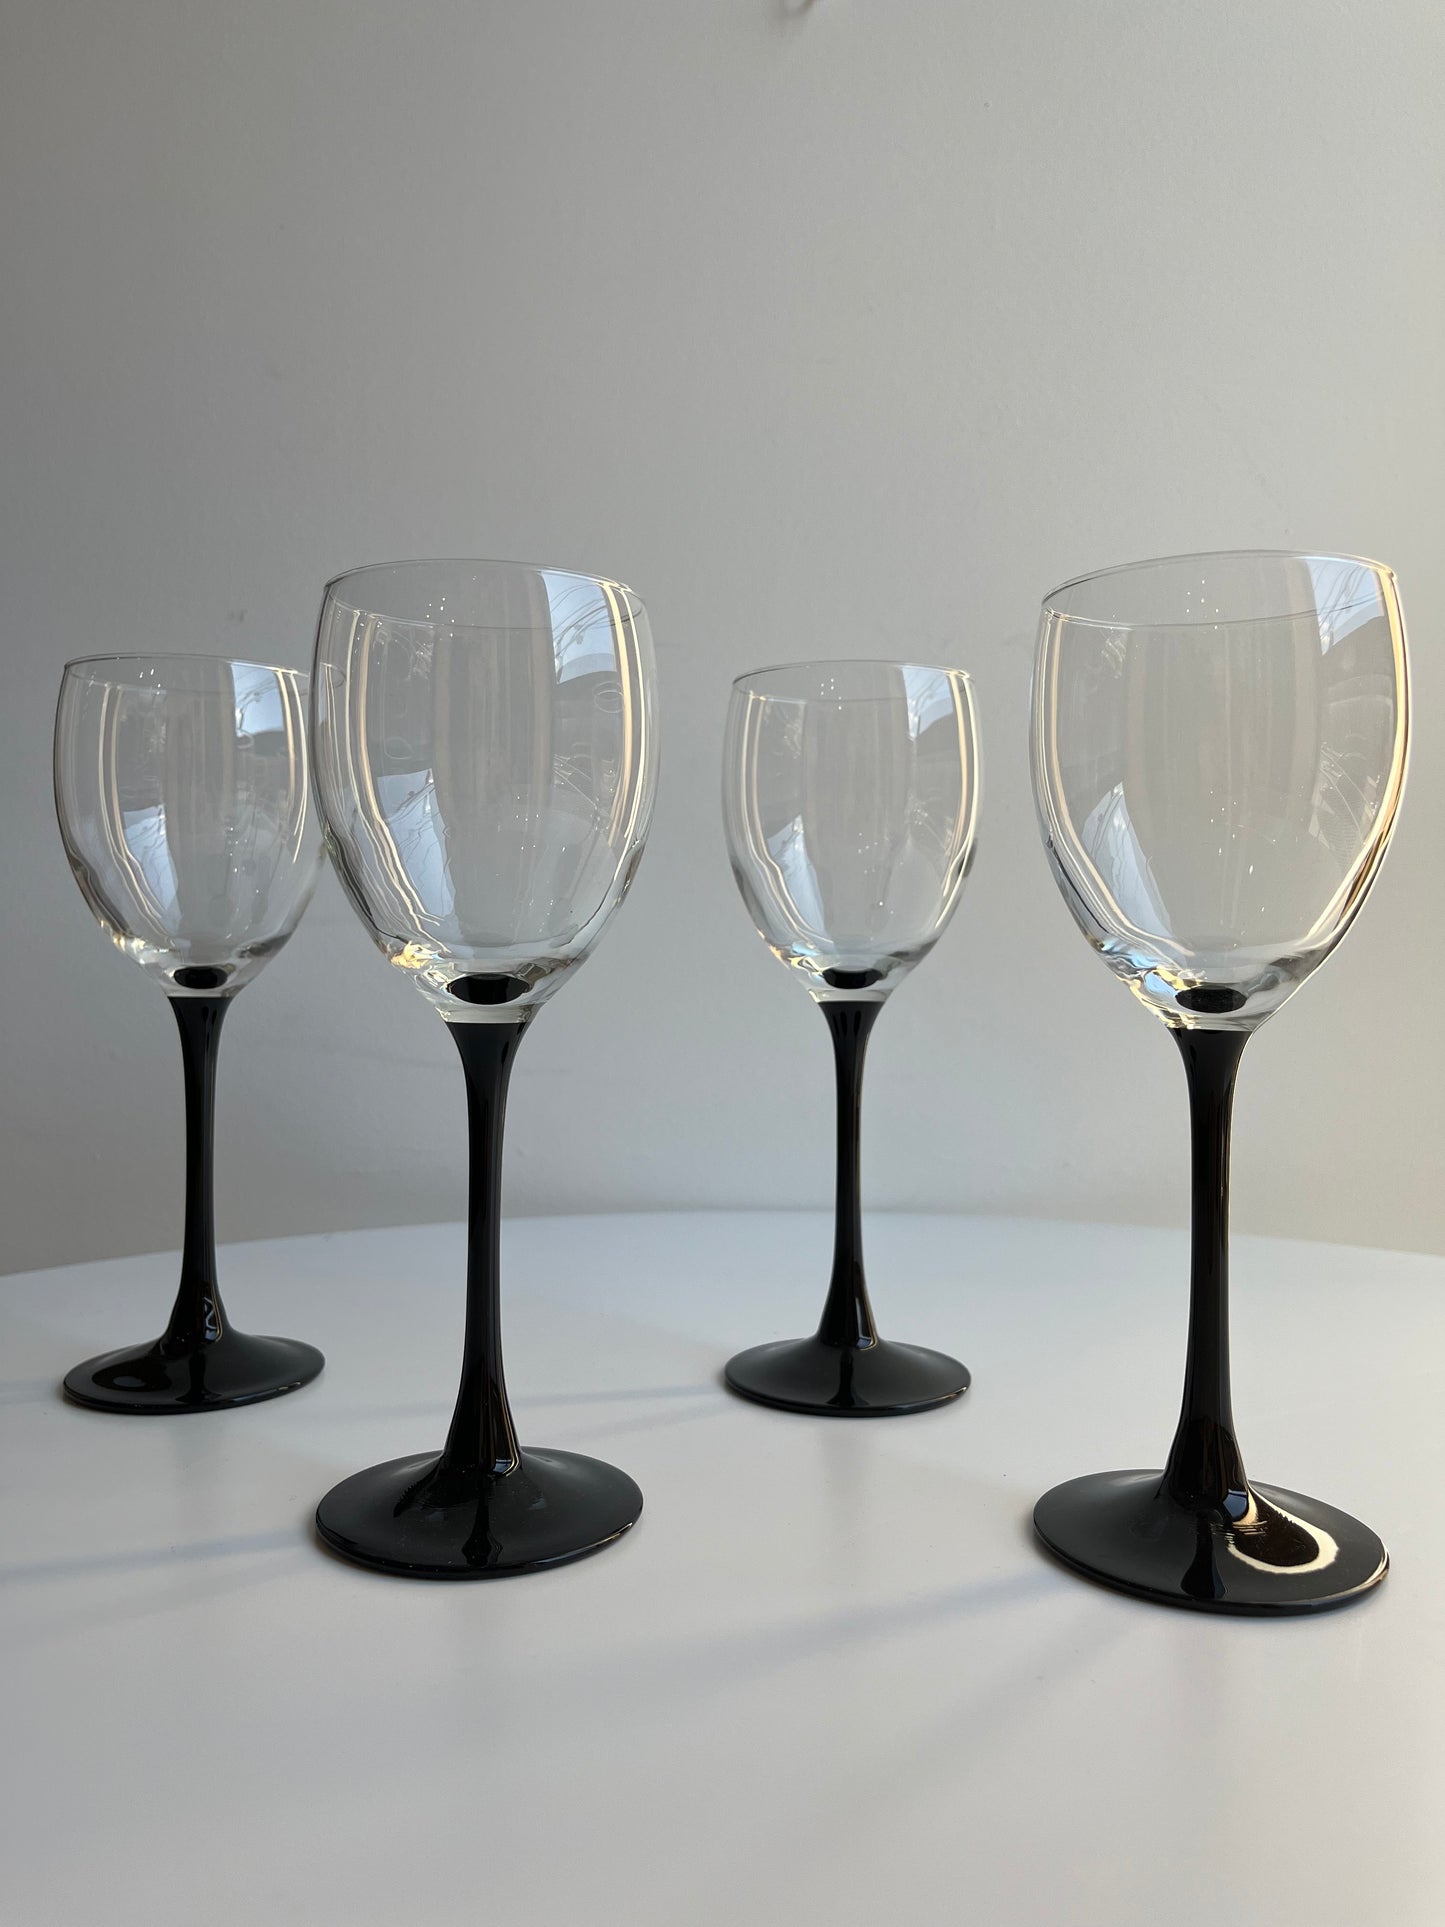 Black Stem Wine Glasses